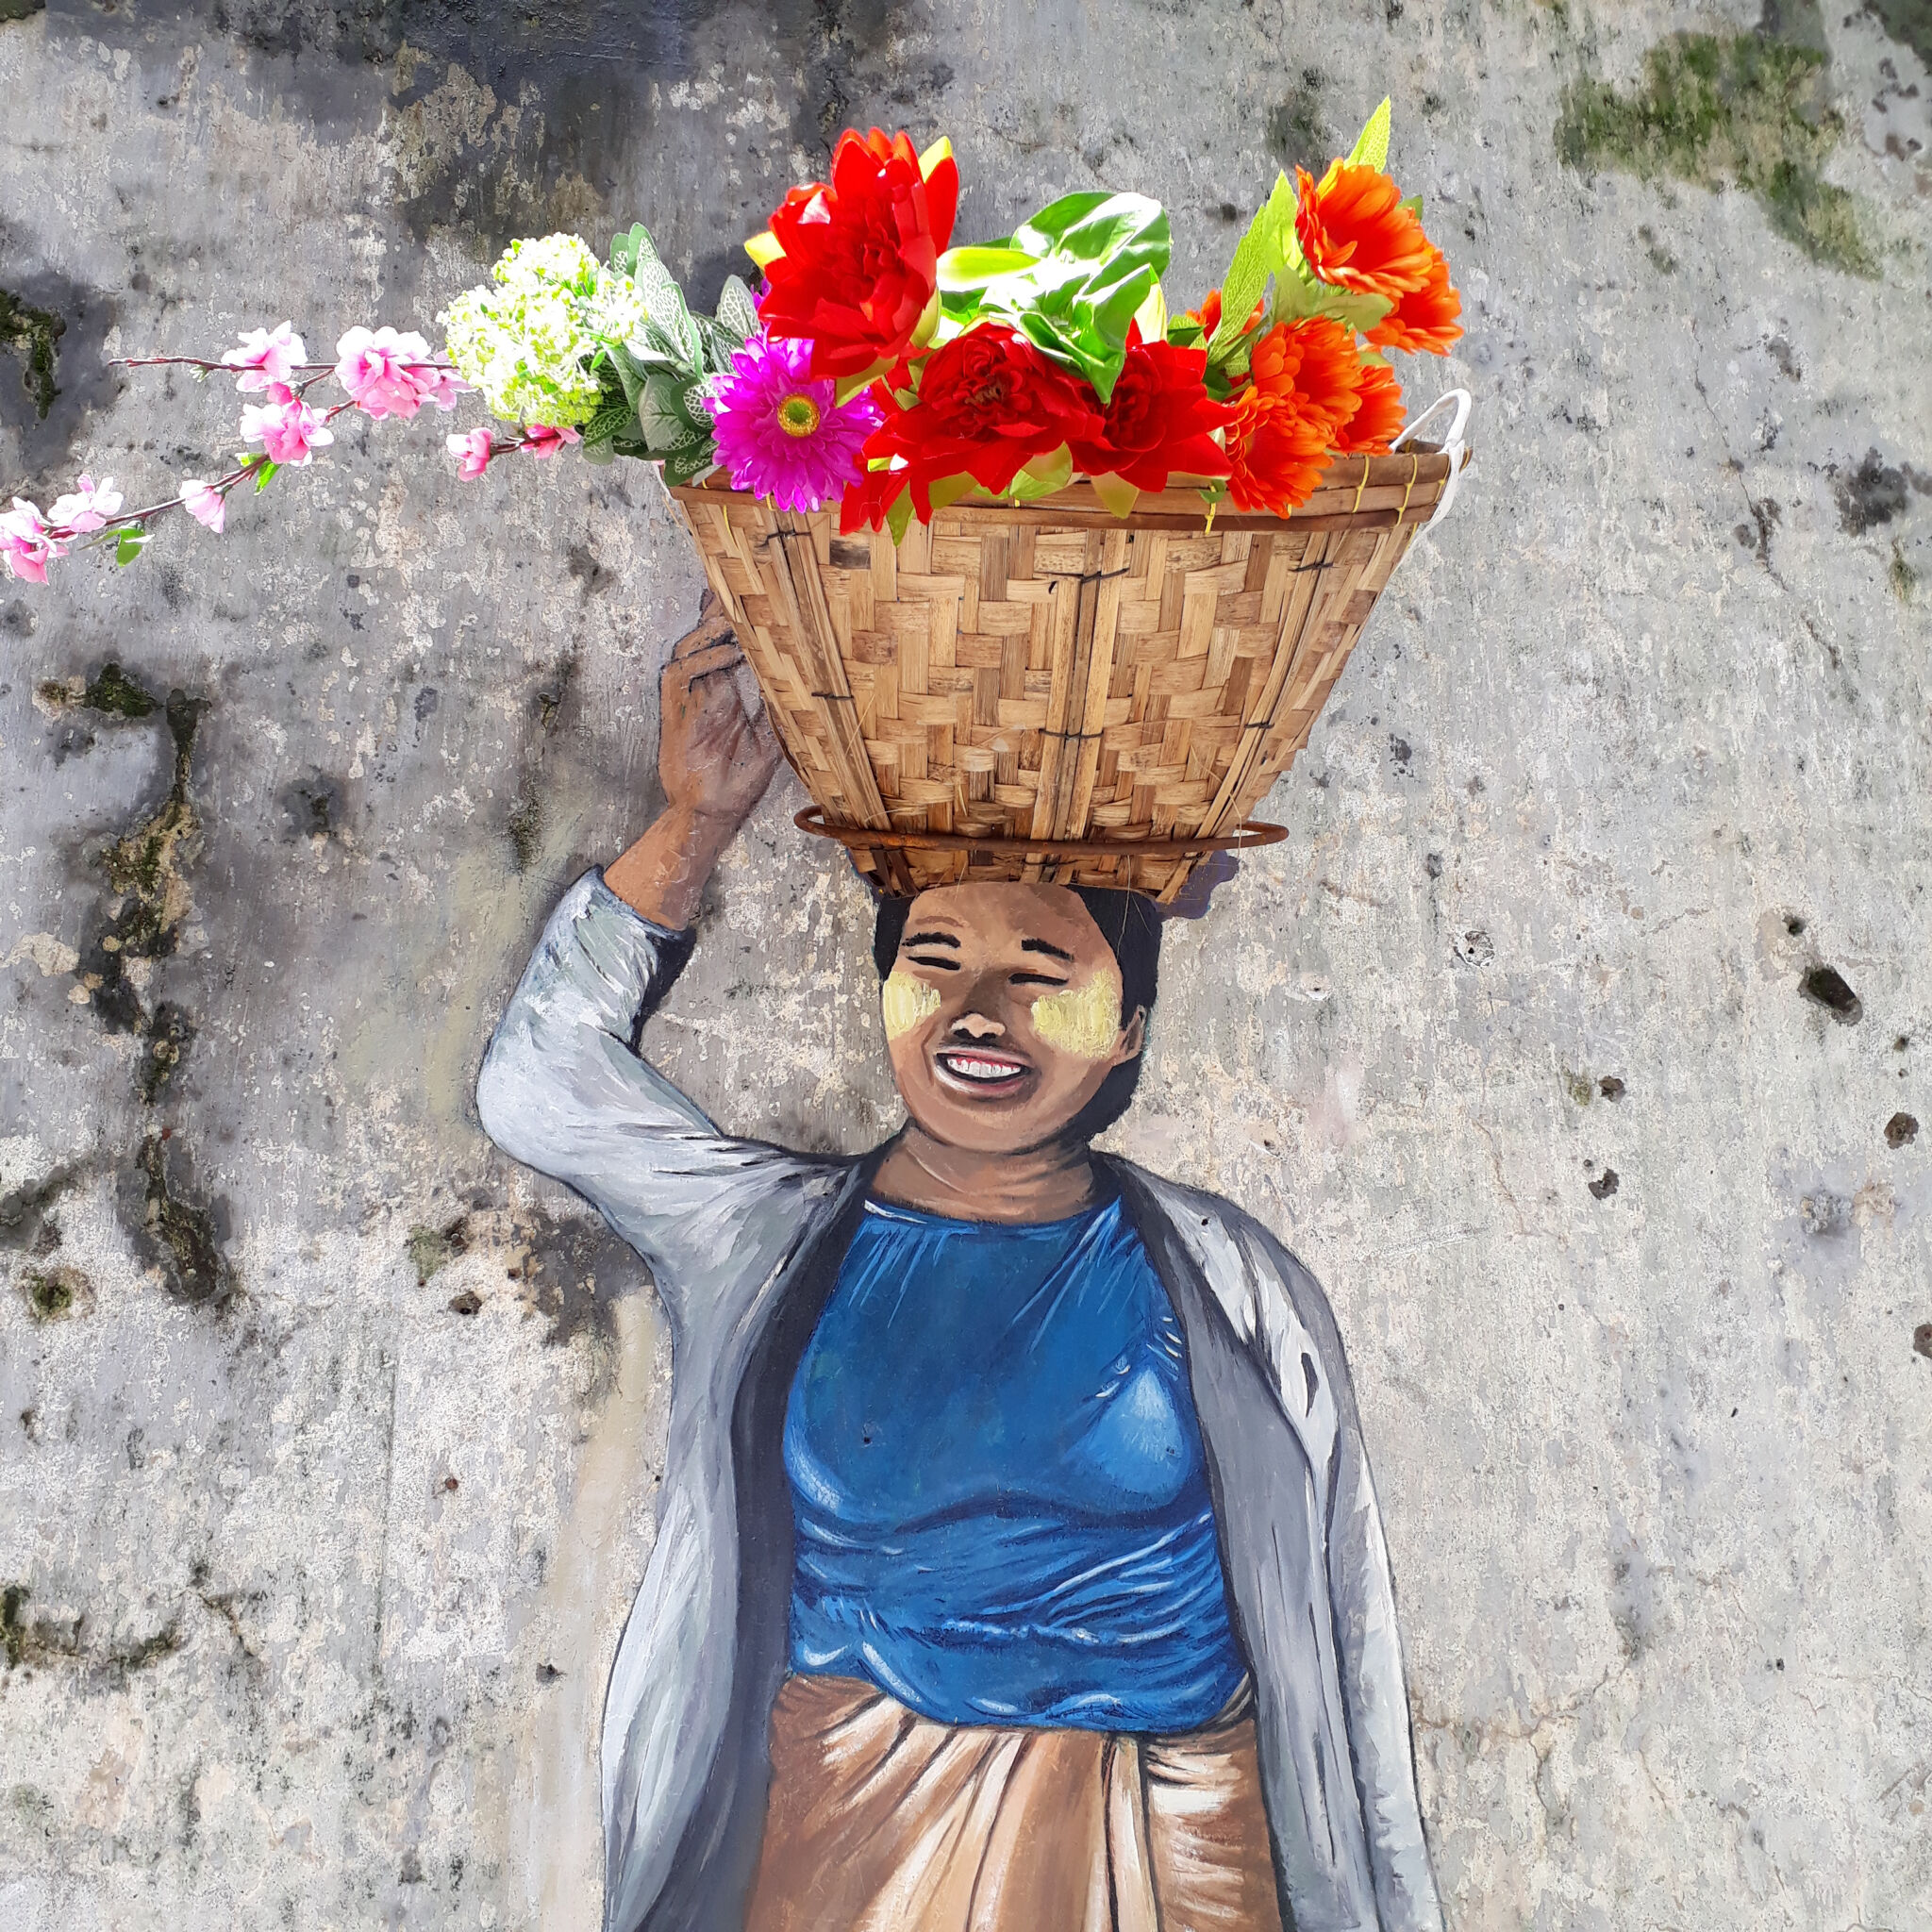 angele de lorme&mdash;Pan Thae aunty and her flowers basket 